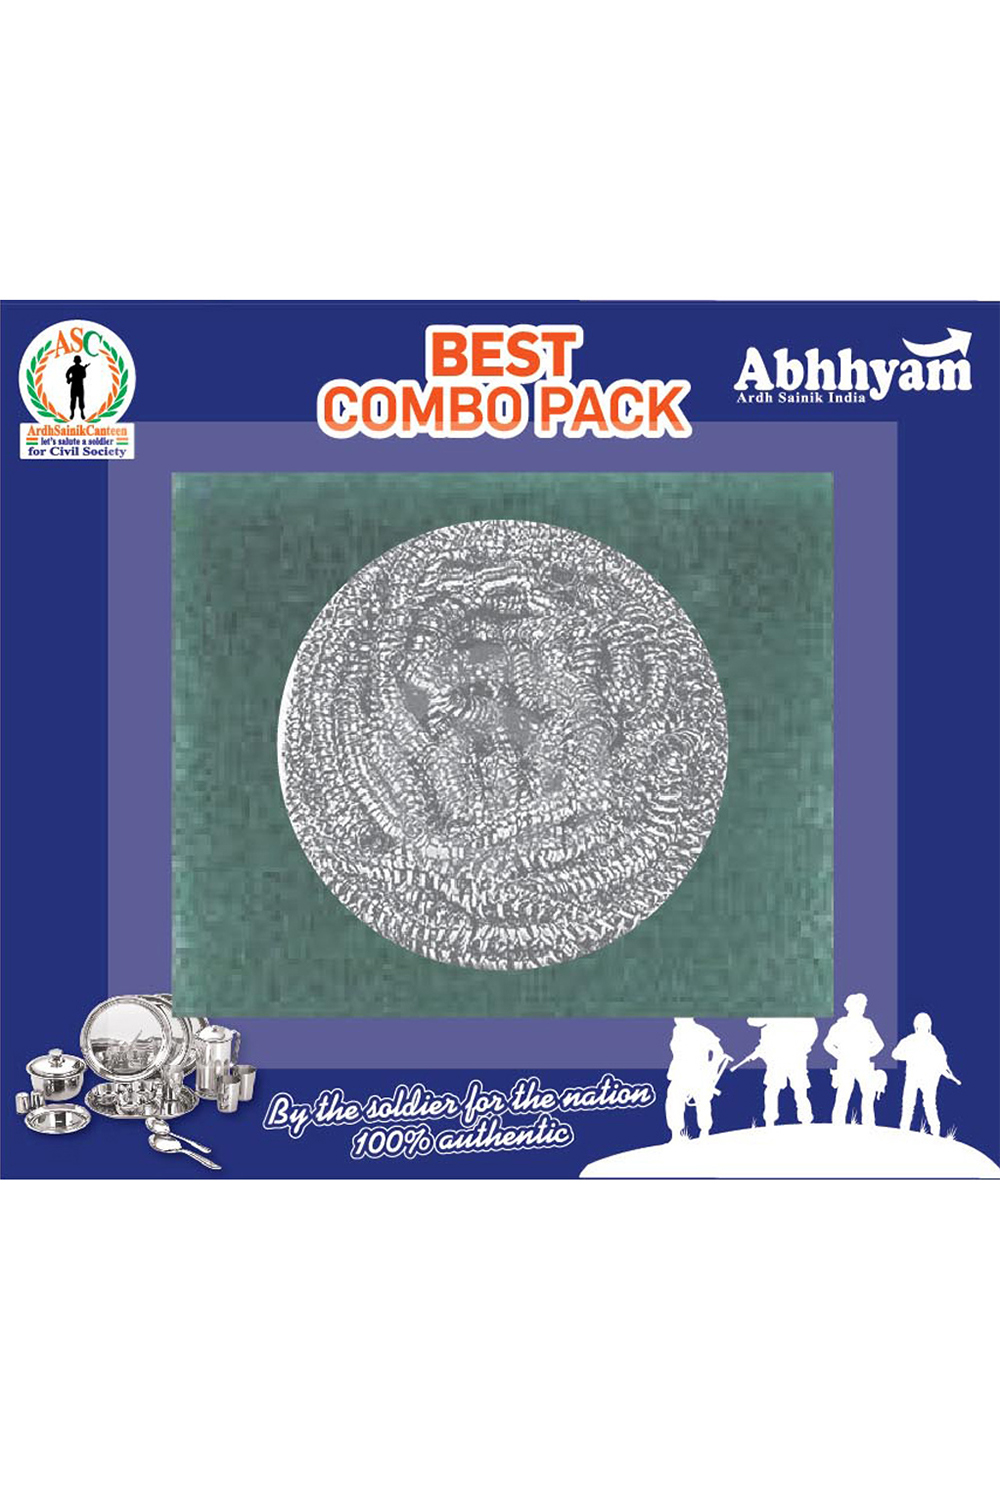 Abhhyam Best Combo Pack Sheet (Scrub Pad 3.5X3.5 Inch, Juna 15Gms)